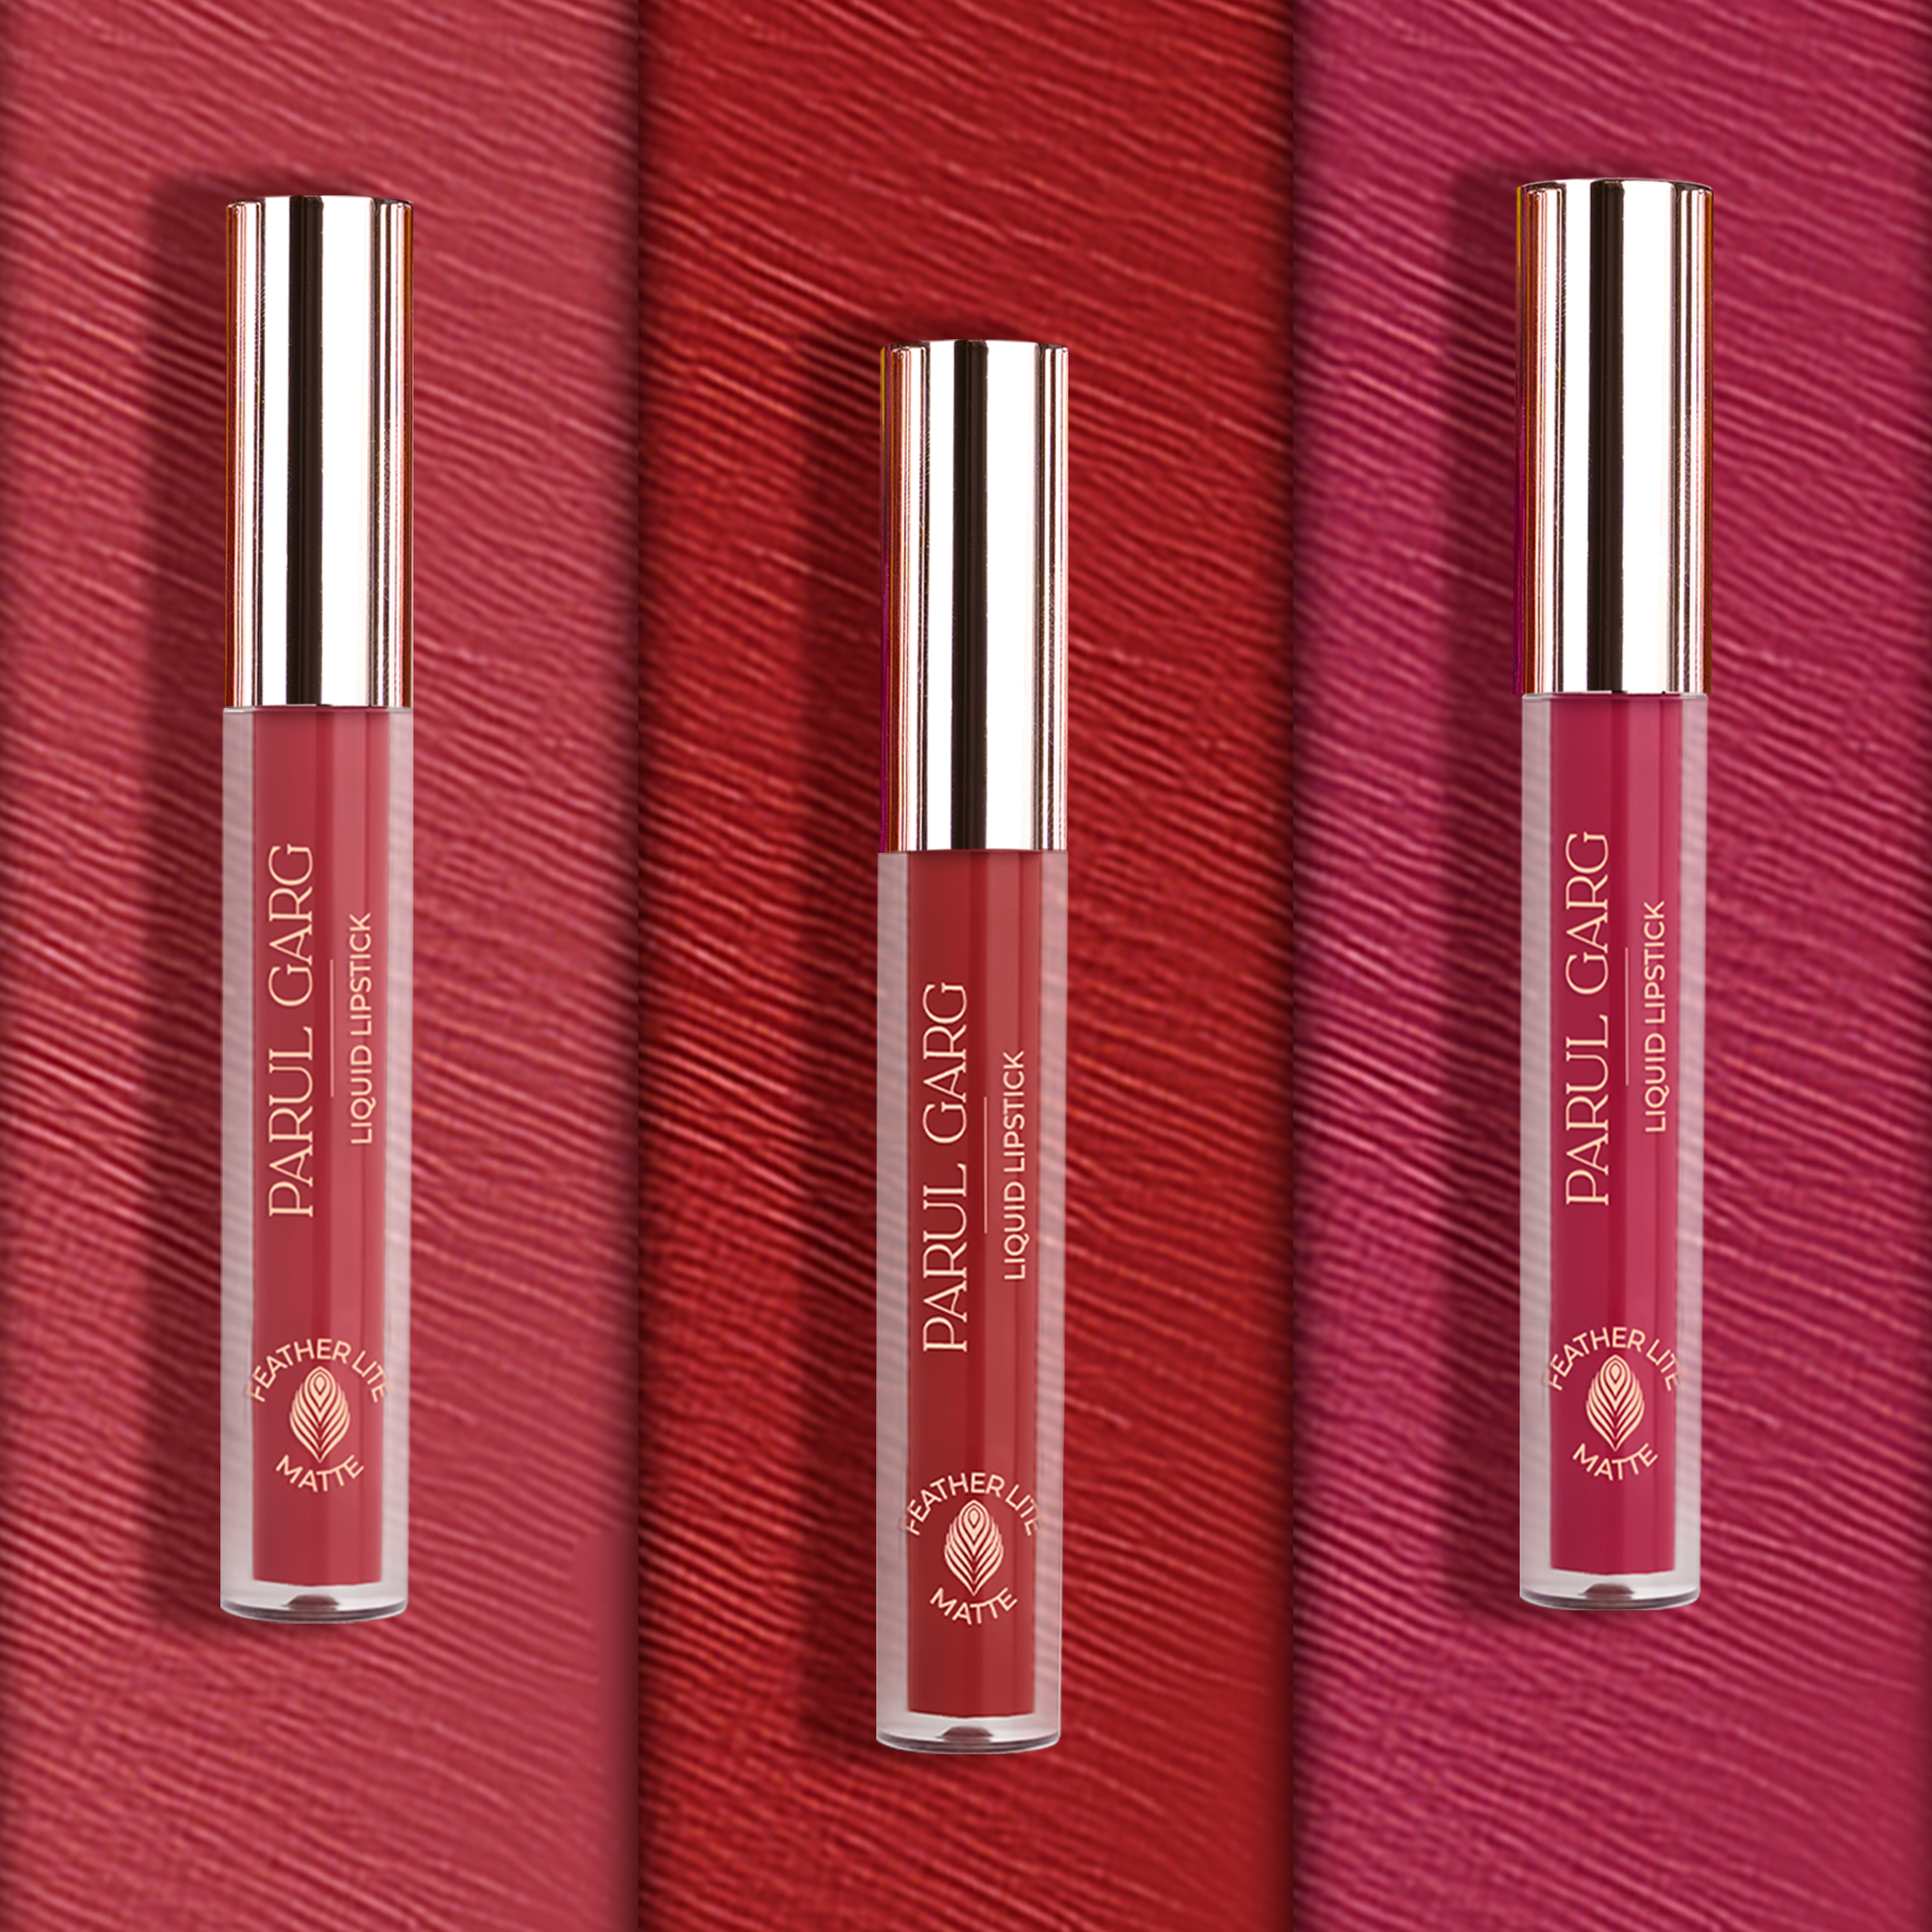 Bold Essentials: Pack-of-Three Featherlites Liquid Lipsticks